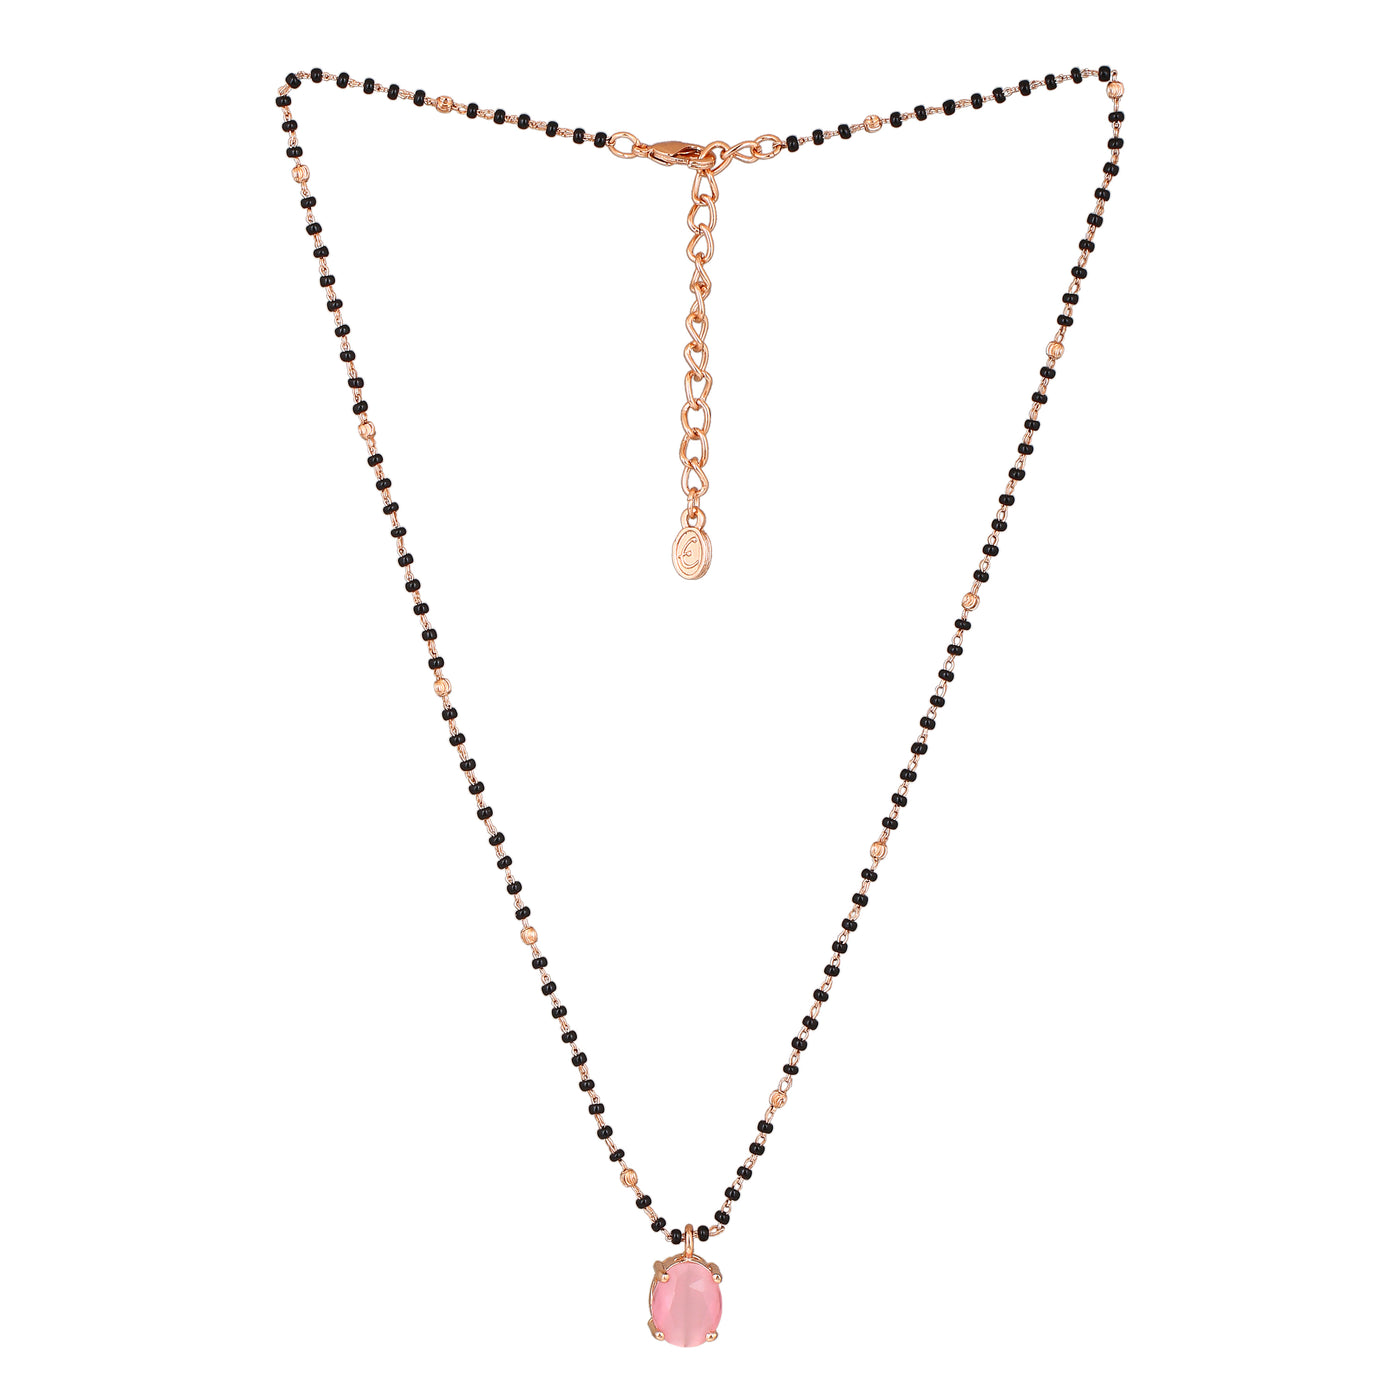 Estele Rose Gold Plated CZ Elegant Round Designer Mangalsutra Necklace Set with Miint Pink Stones for Women